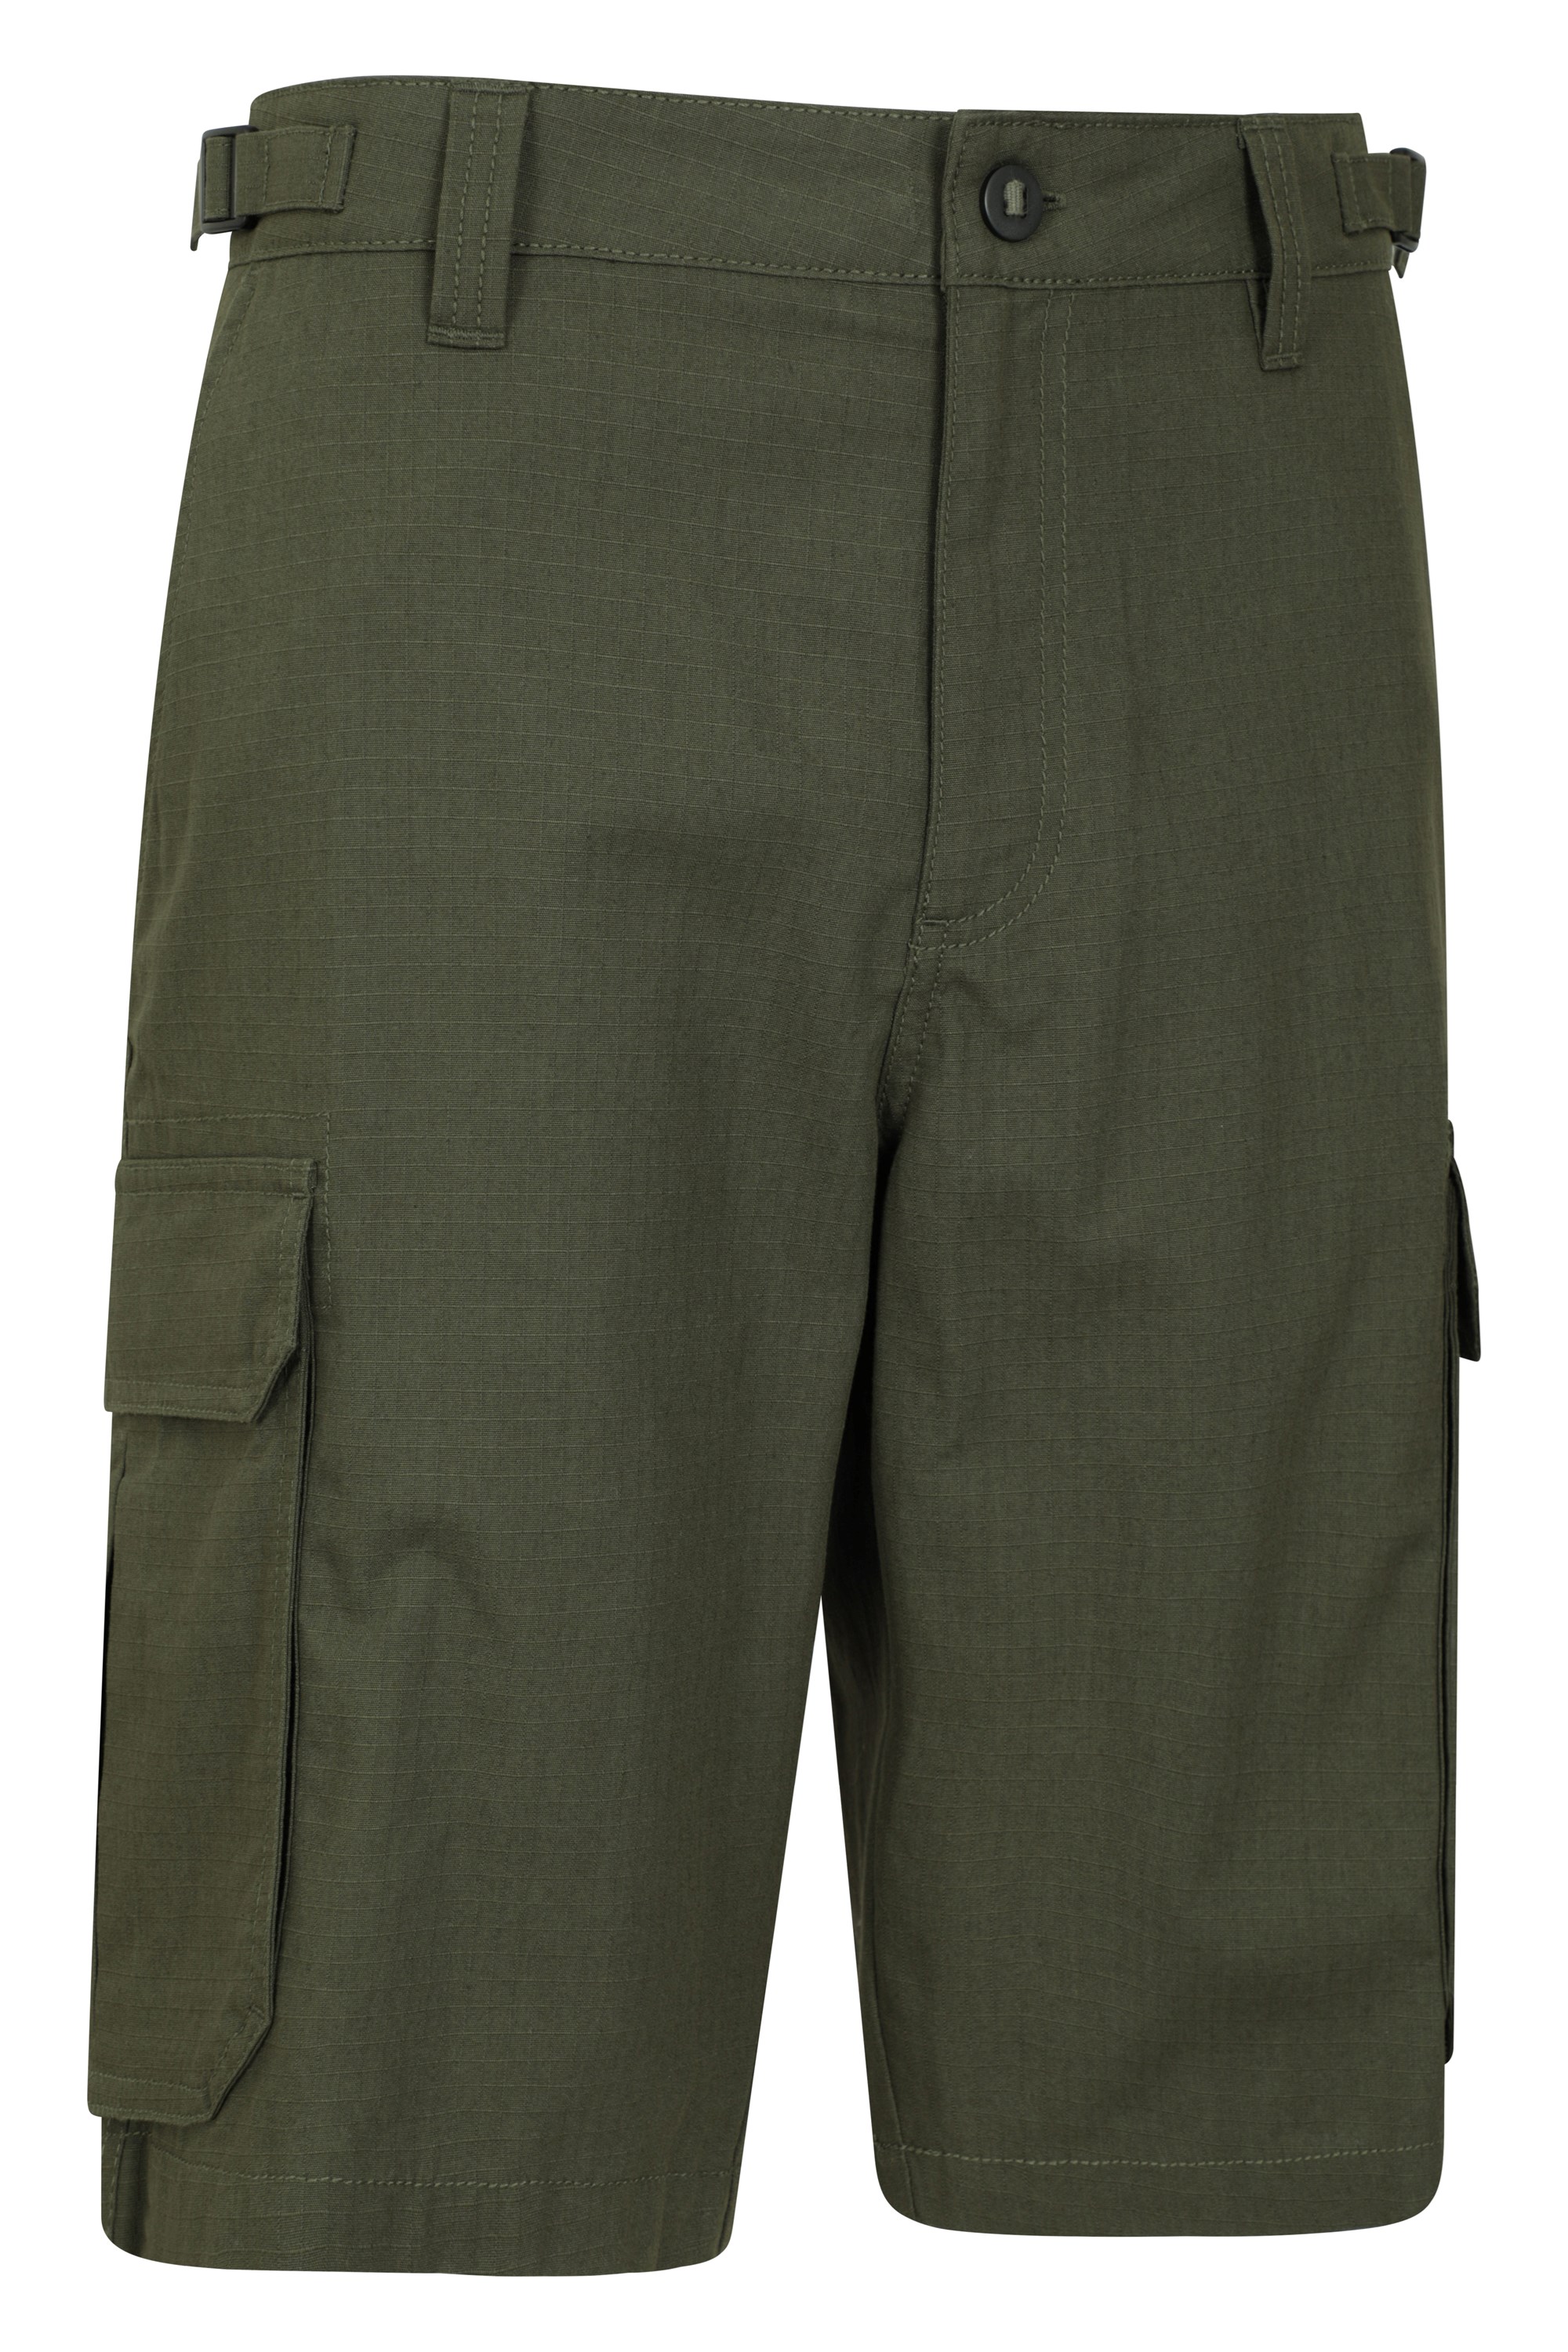 Mountain Warehouse Prospect Rip-Stop Mens Cargo Shorts - Green | Size W36